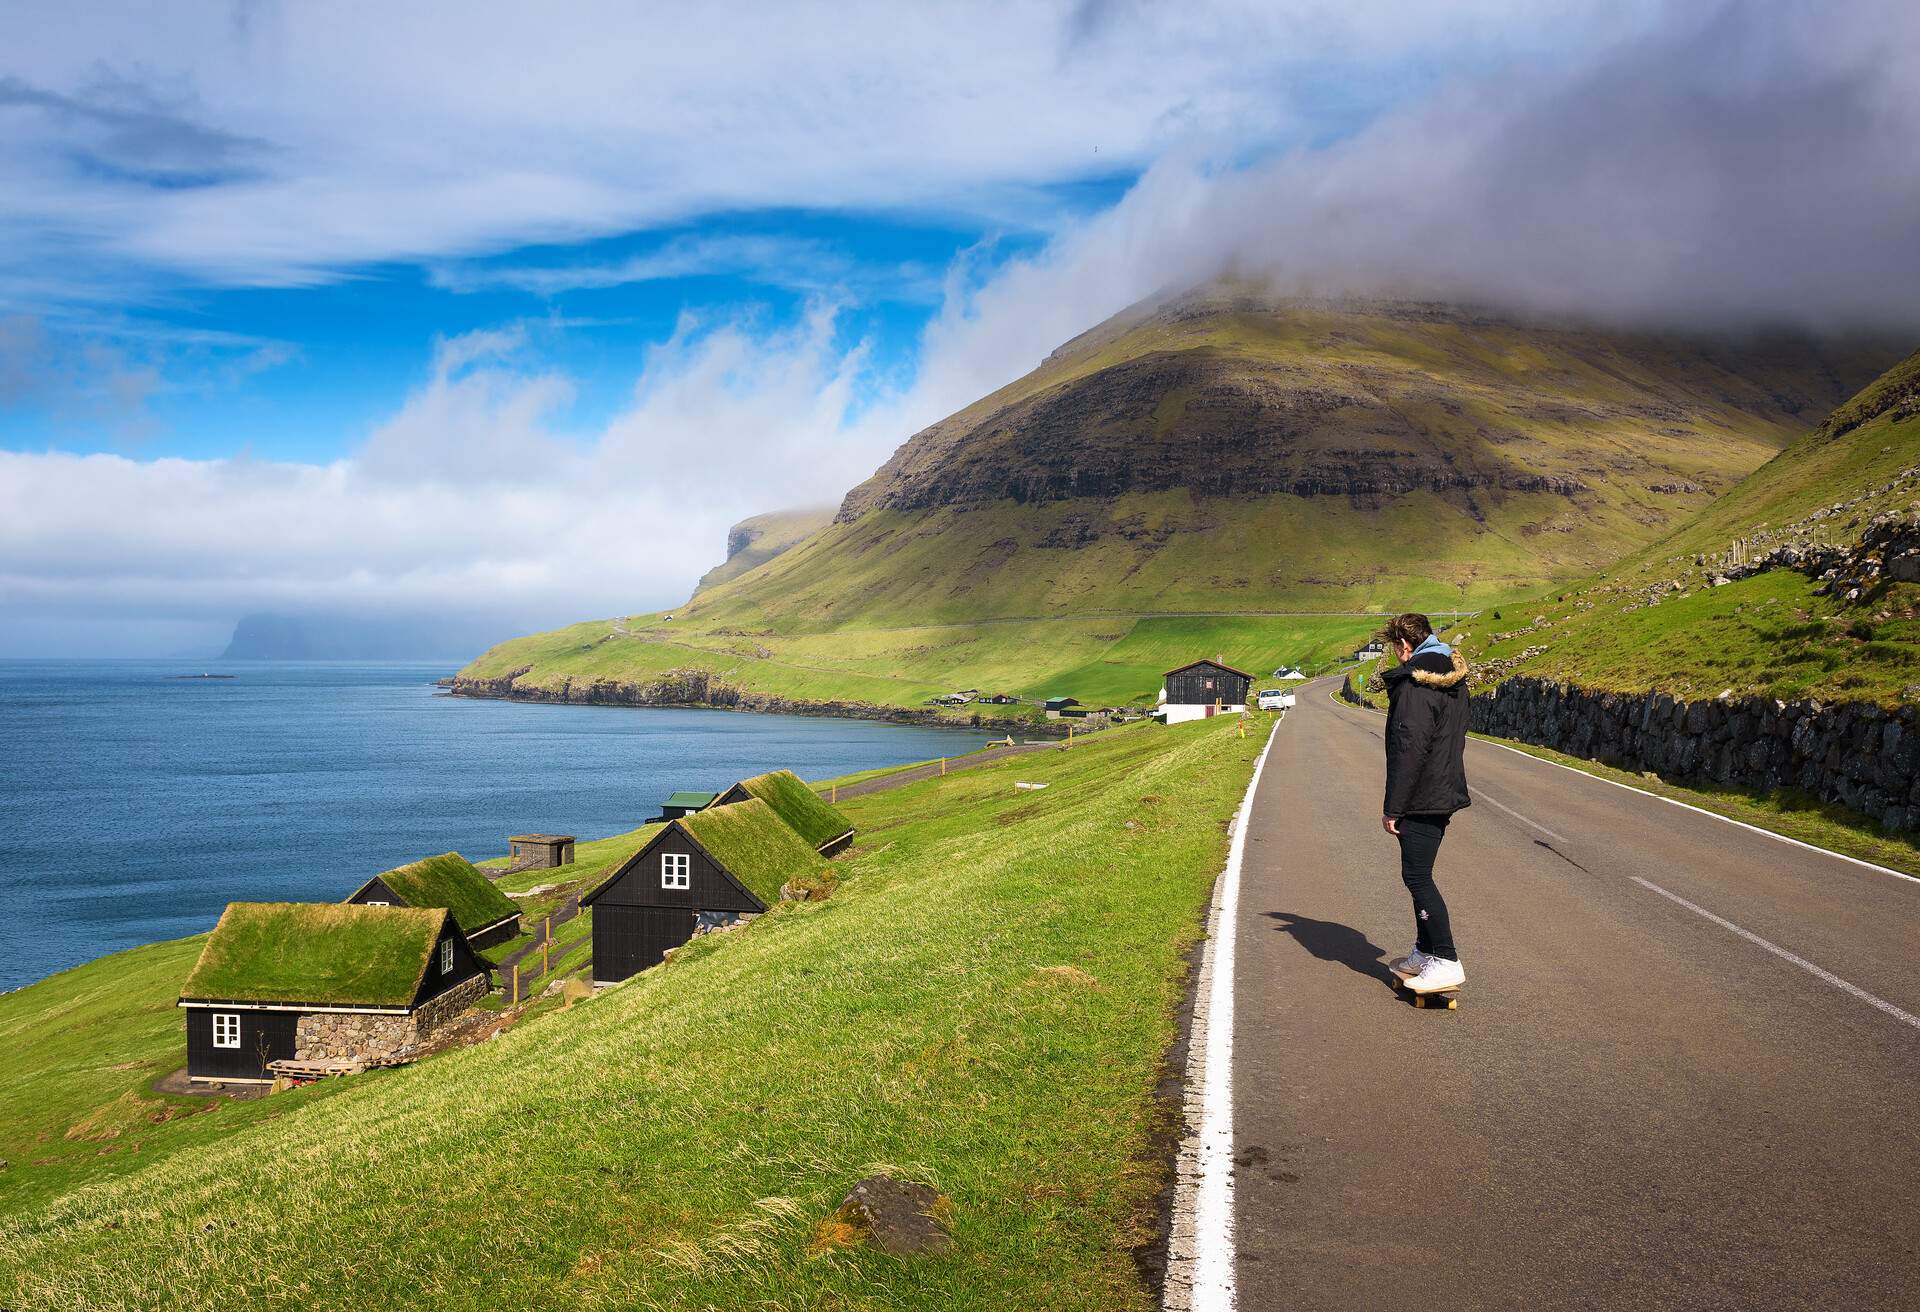 Skater riding a skateboard through the coastal village of Bour on the Faroe Islands